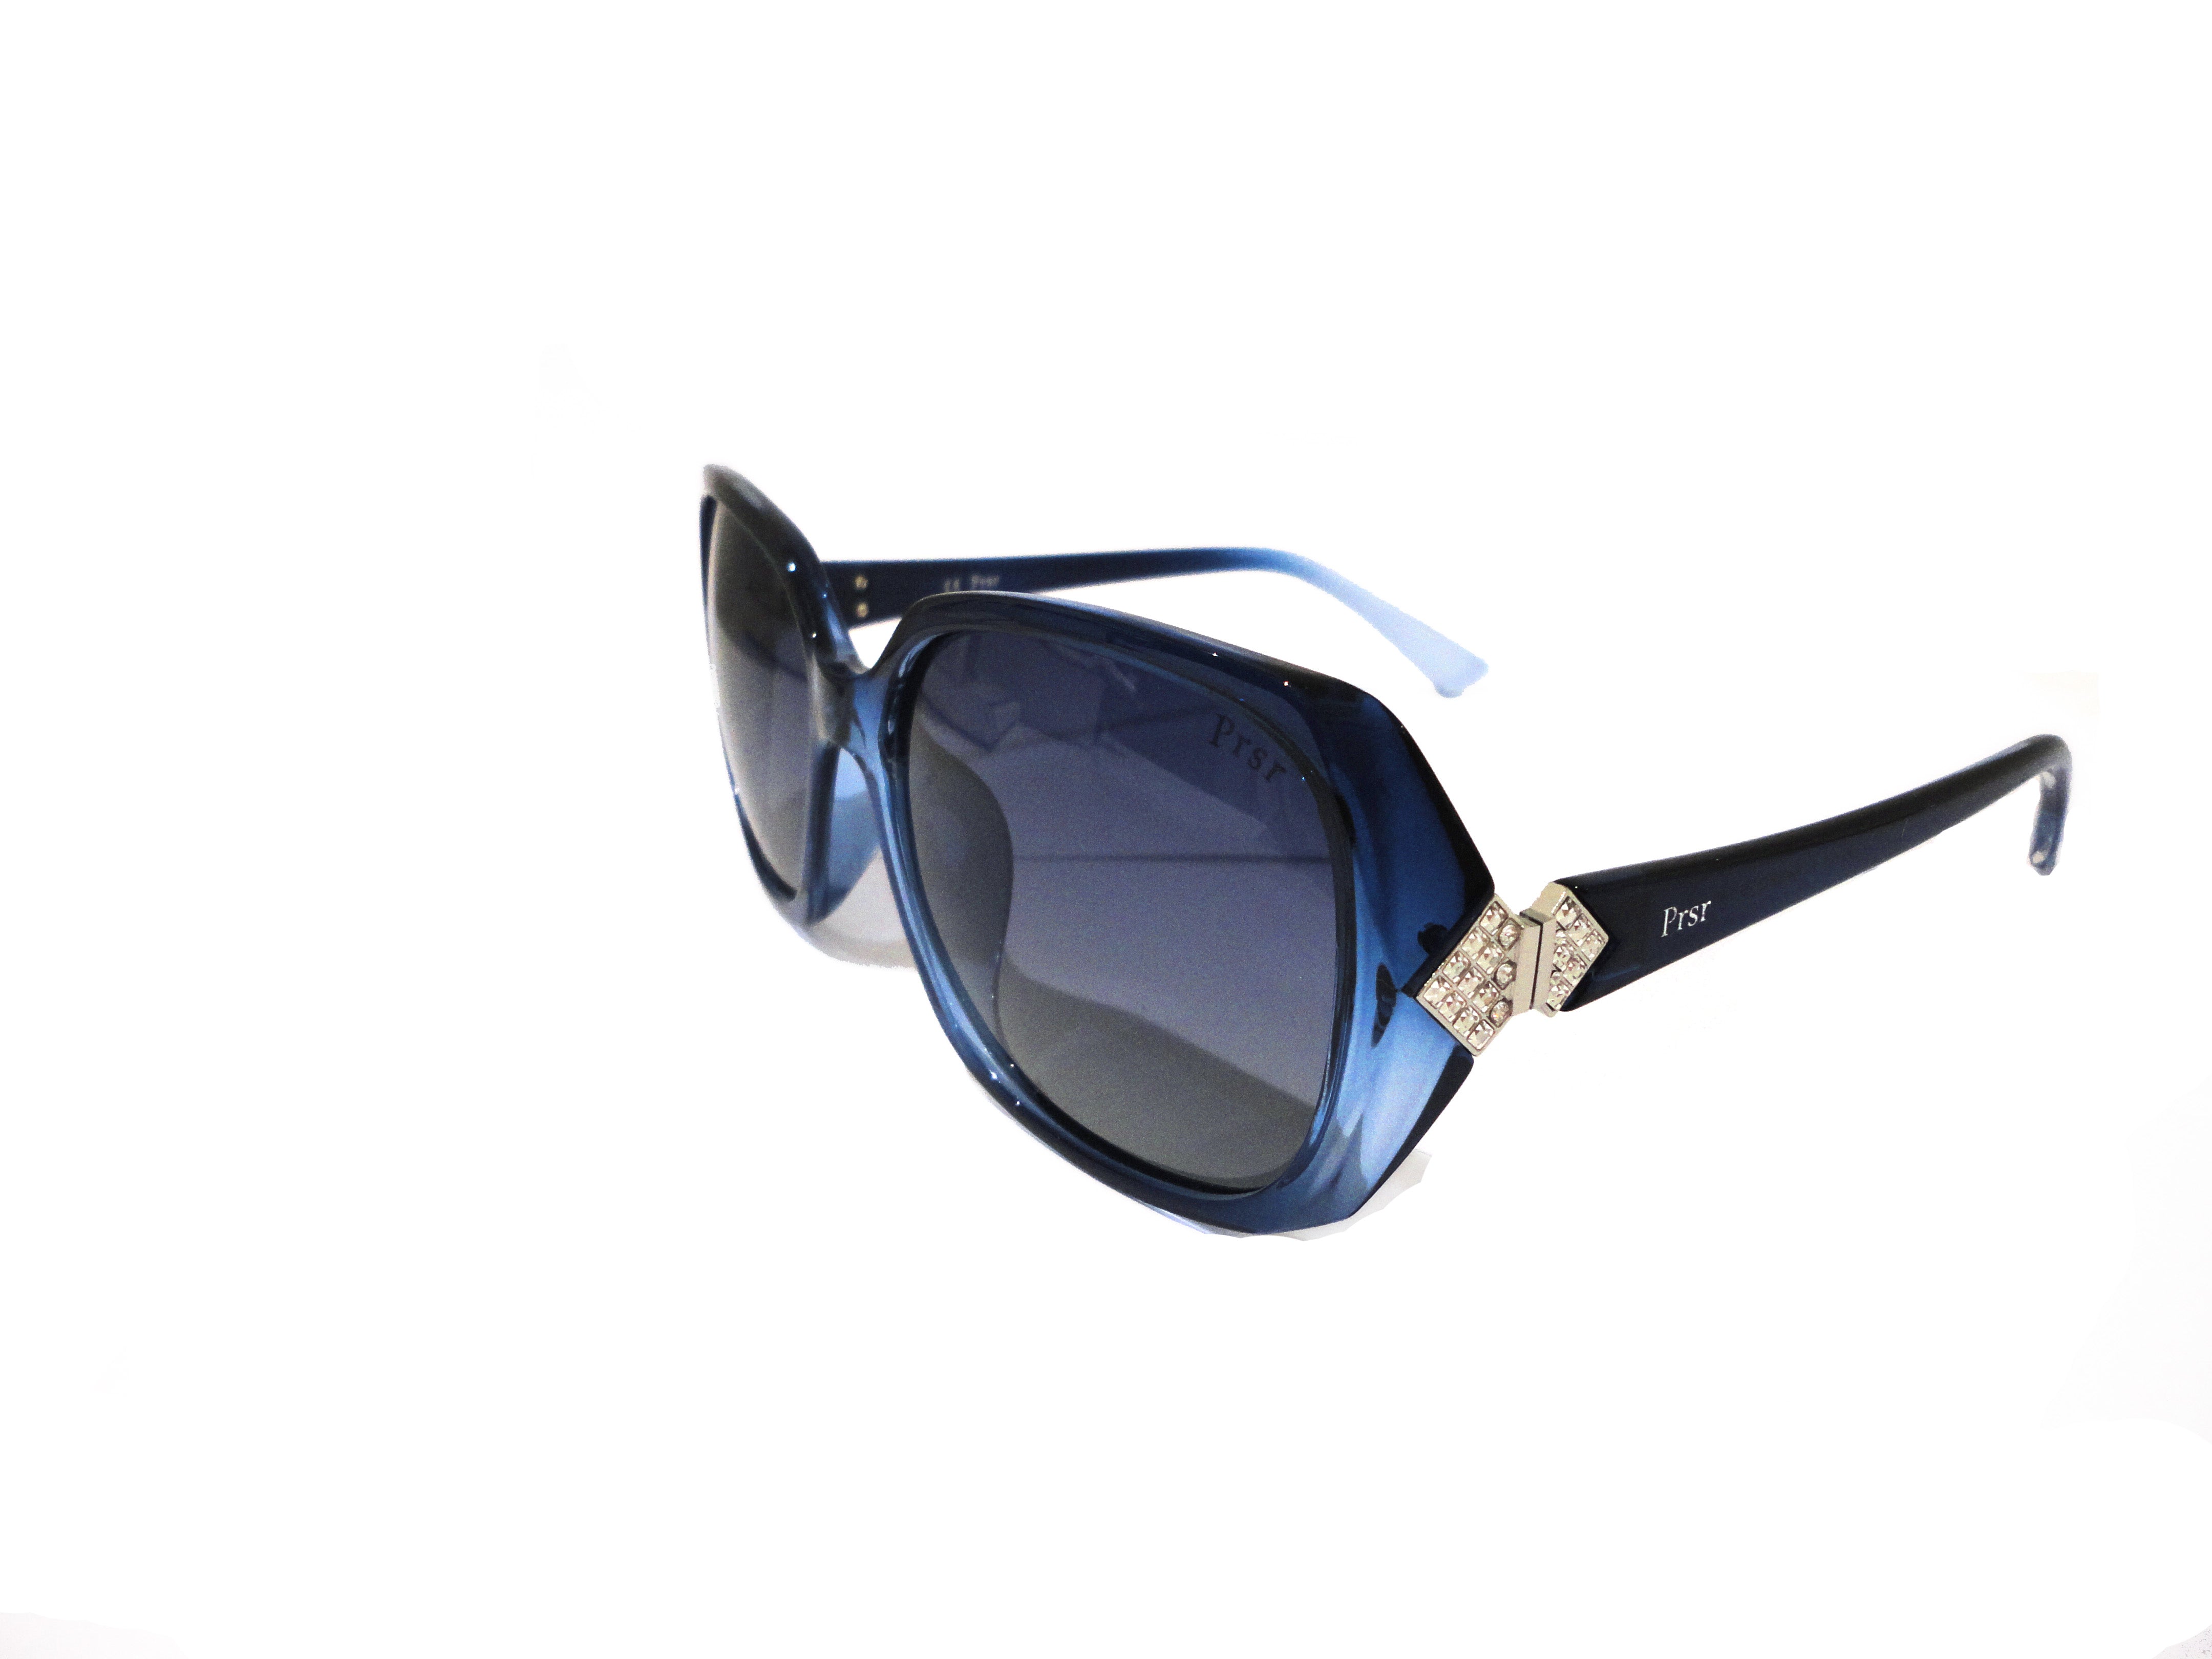 PRSR T60101 - Women Oversize Fashion Sunglasses Black/Blue